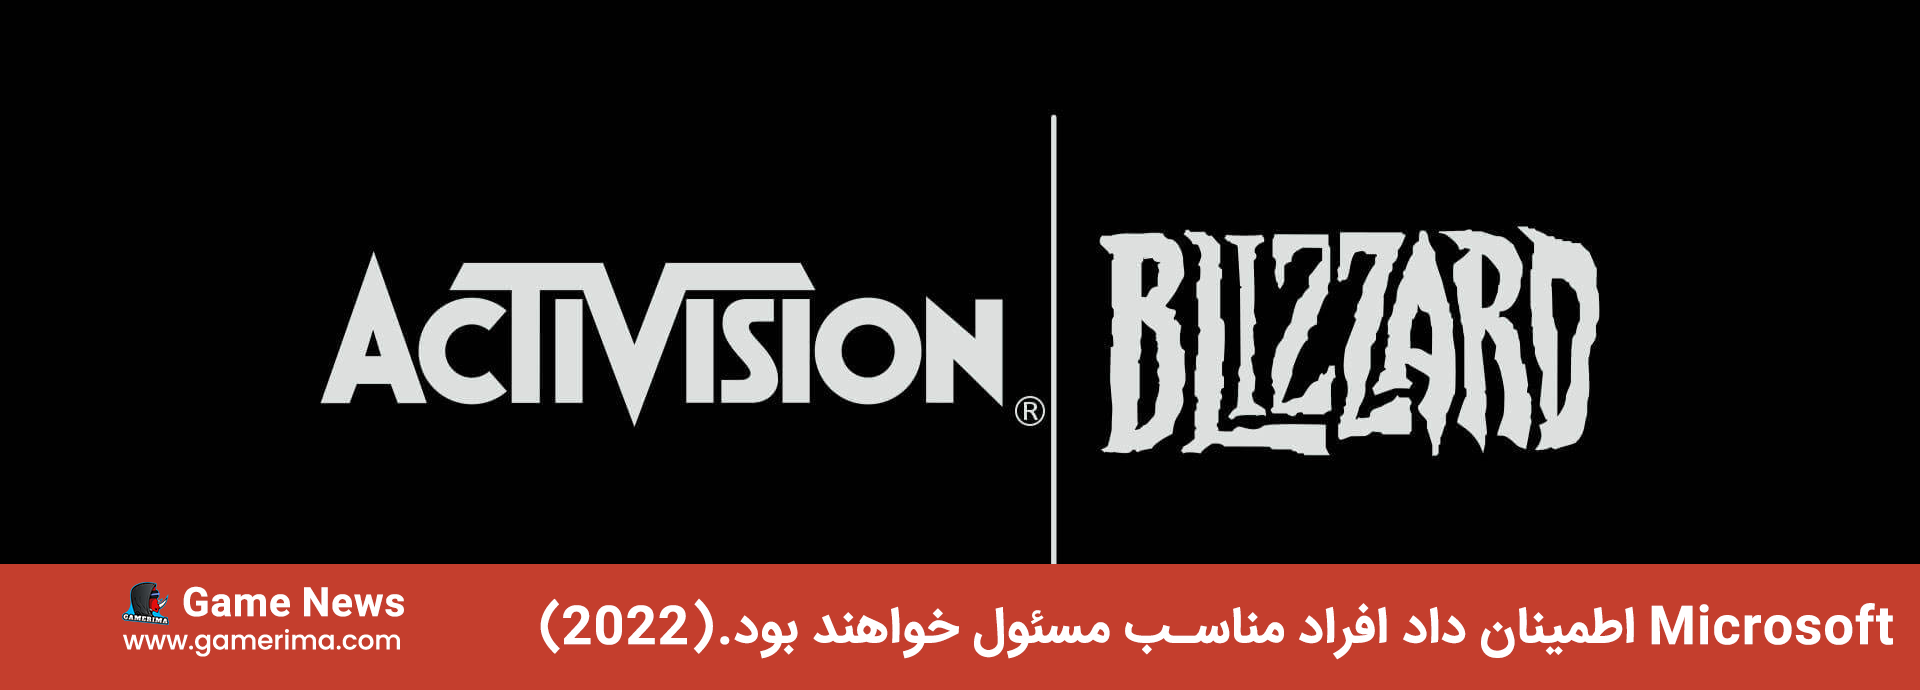 Microsoft اطمینان داد که افراد مناسب مسئول Activision Blizzard خواهند بود.